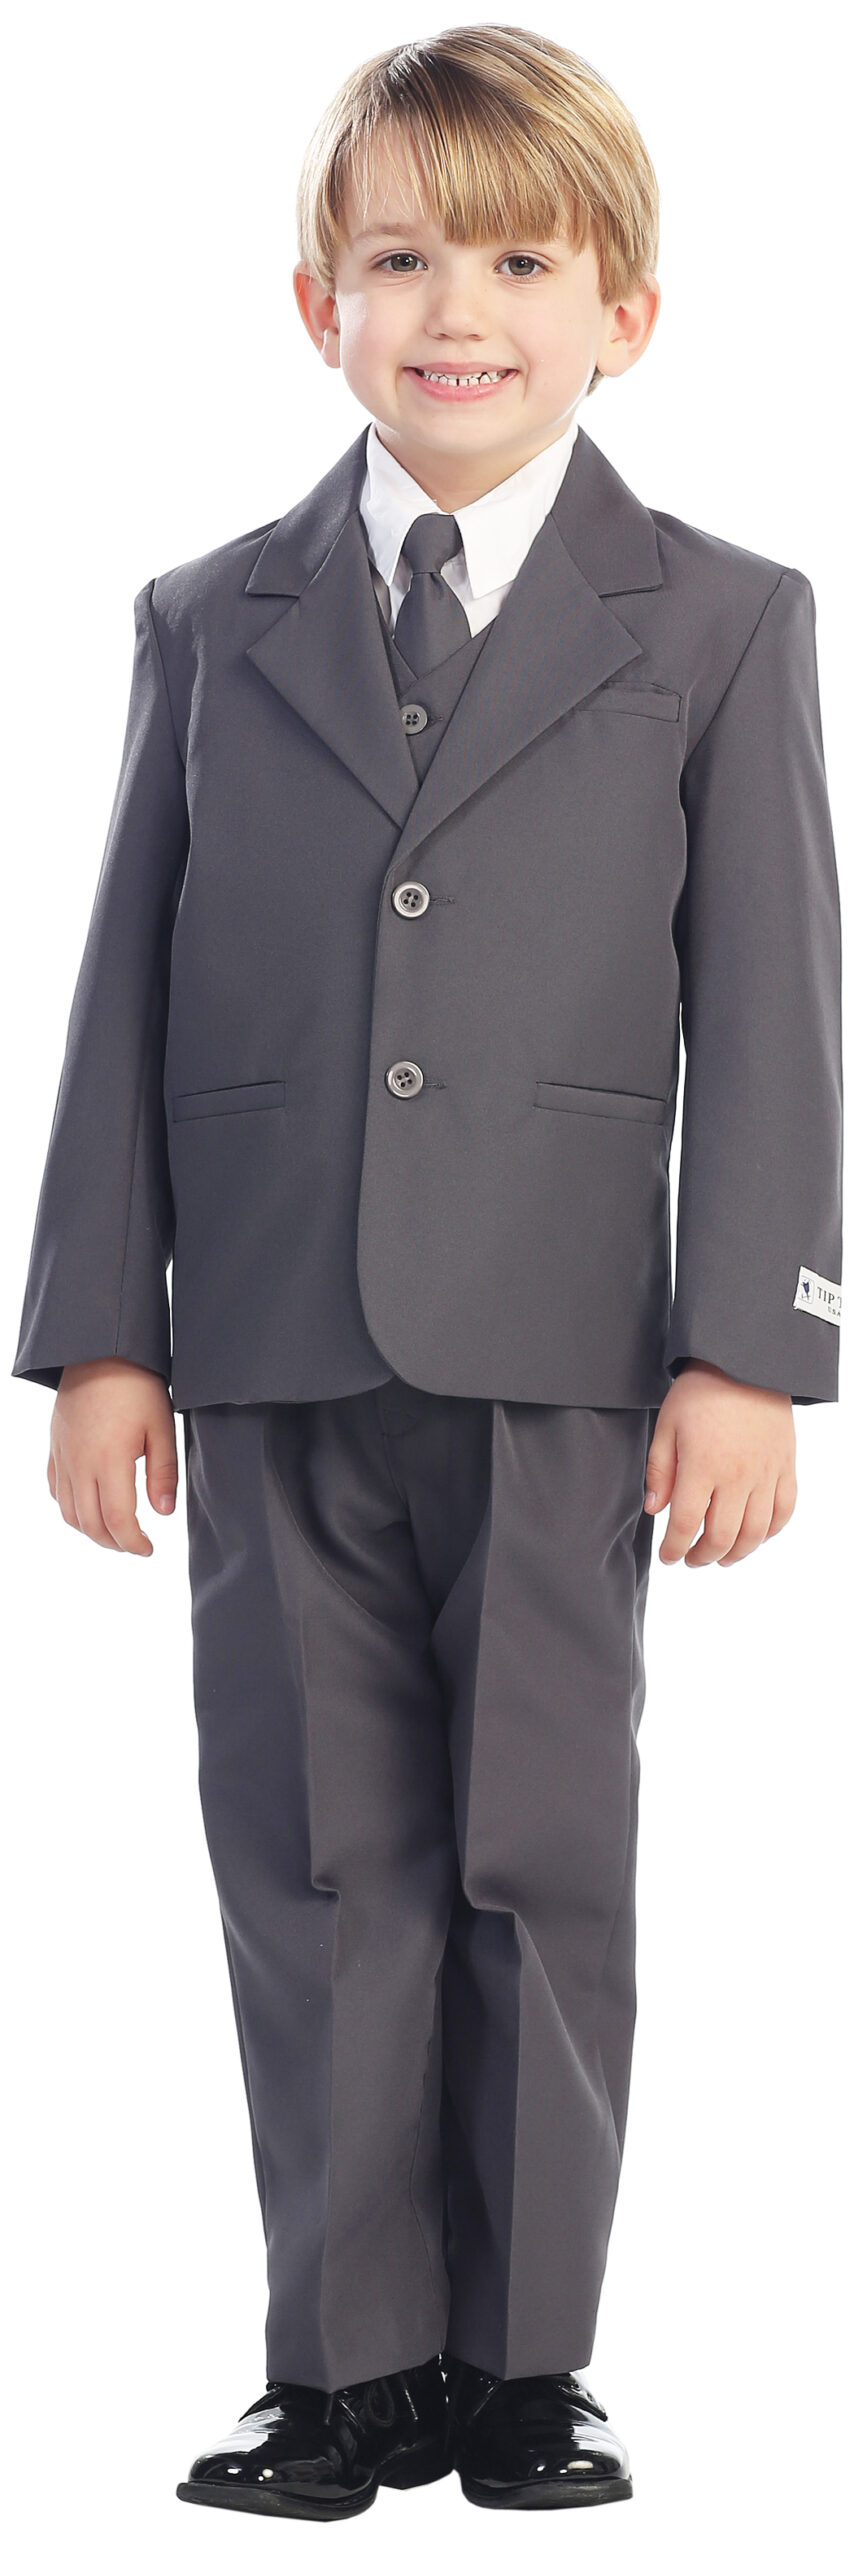 Avery Hill 5-Piece Boy's 2-Button Dress Suit Full-Back Vest - Charcoal Grey Size 7